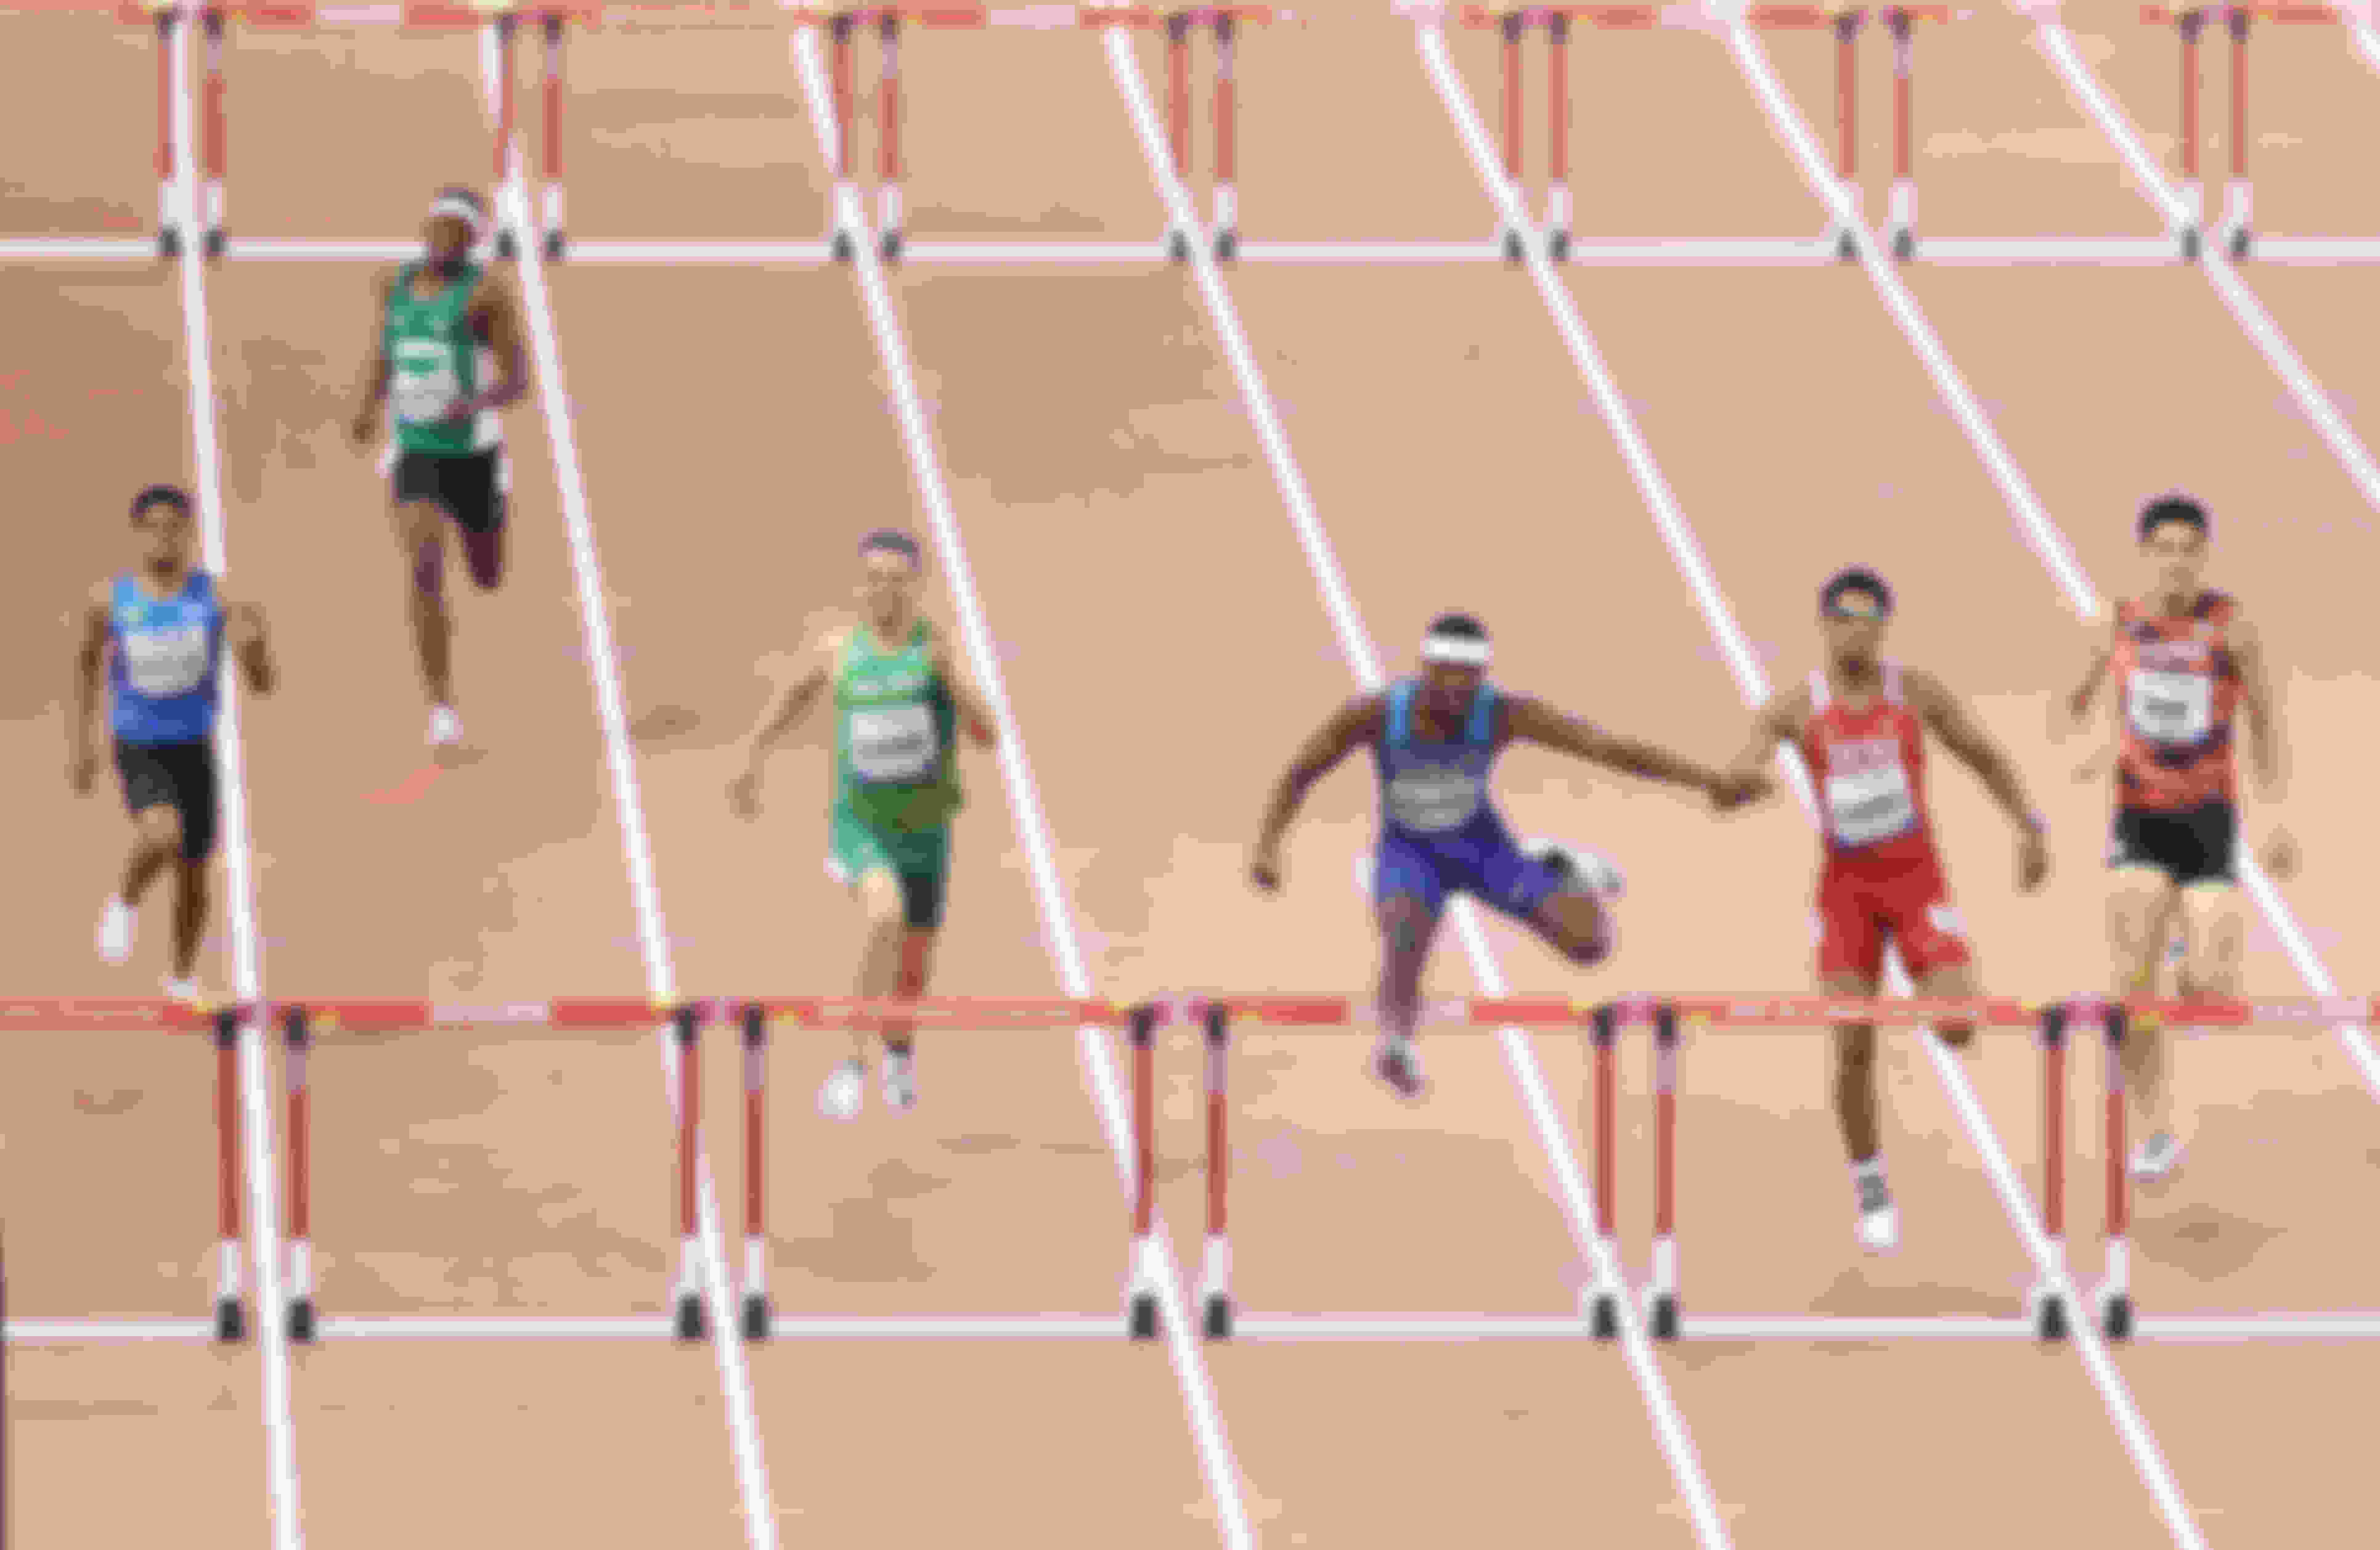 Snapshot of the 400m Hurdles race in Doha